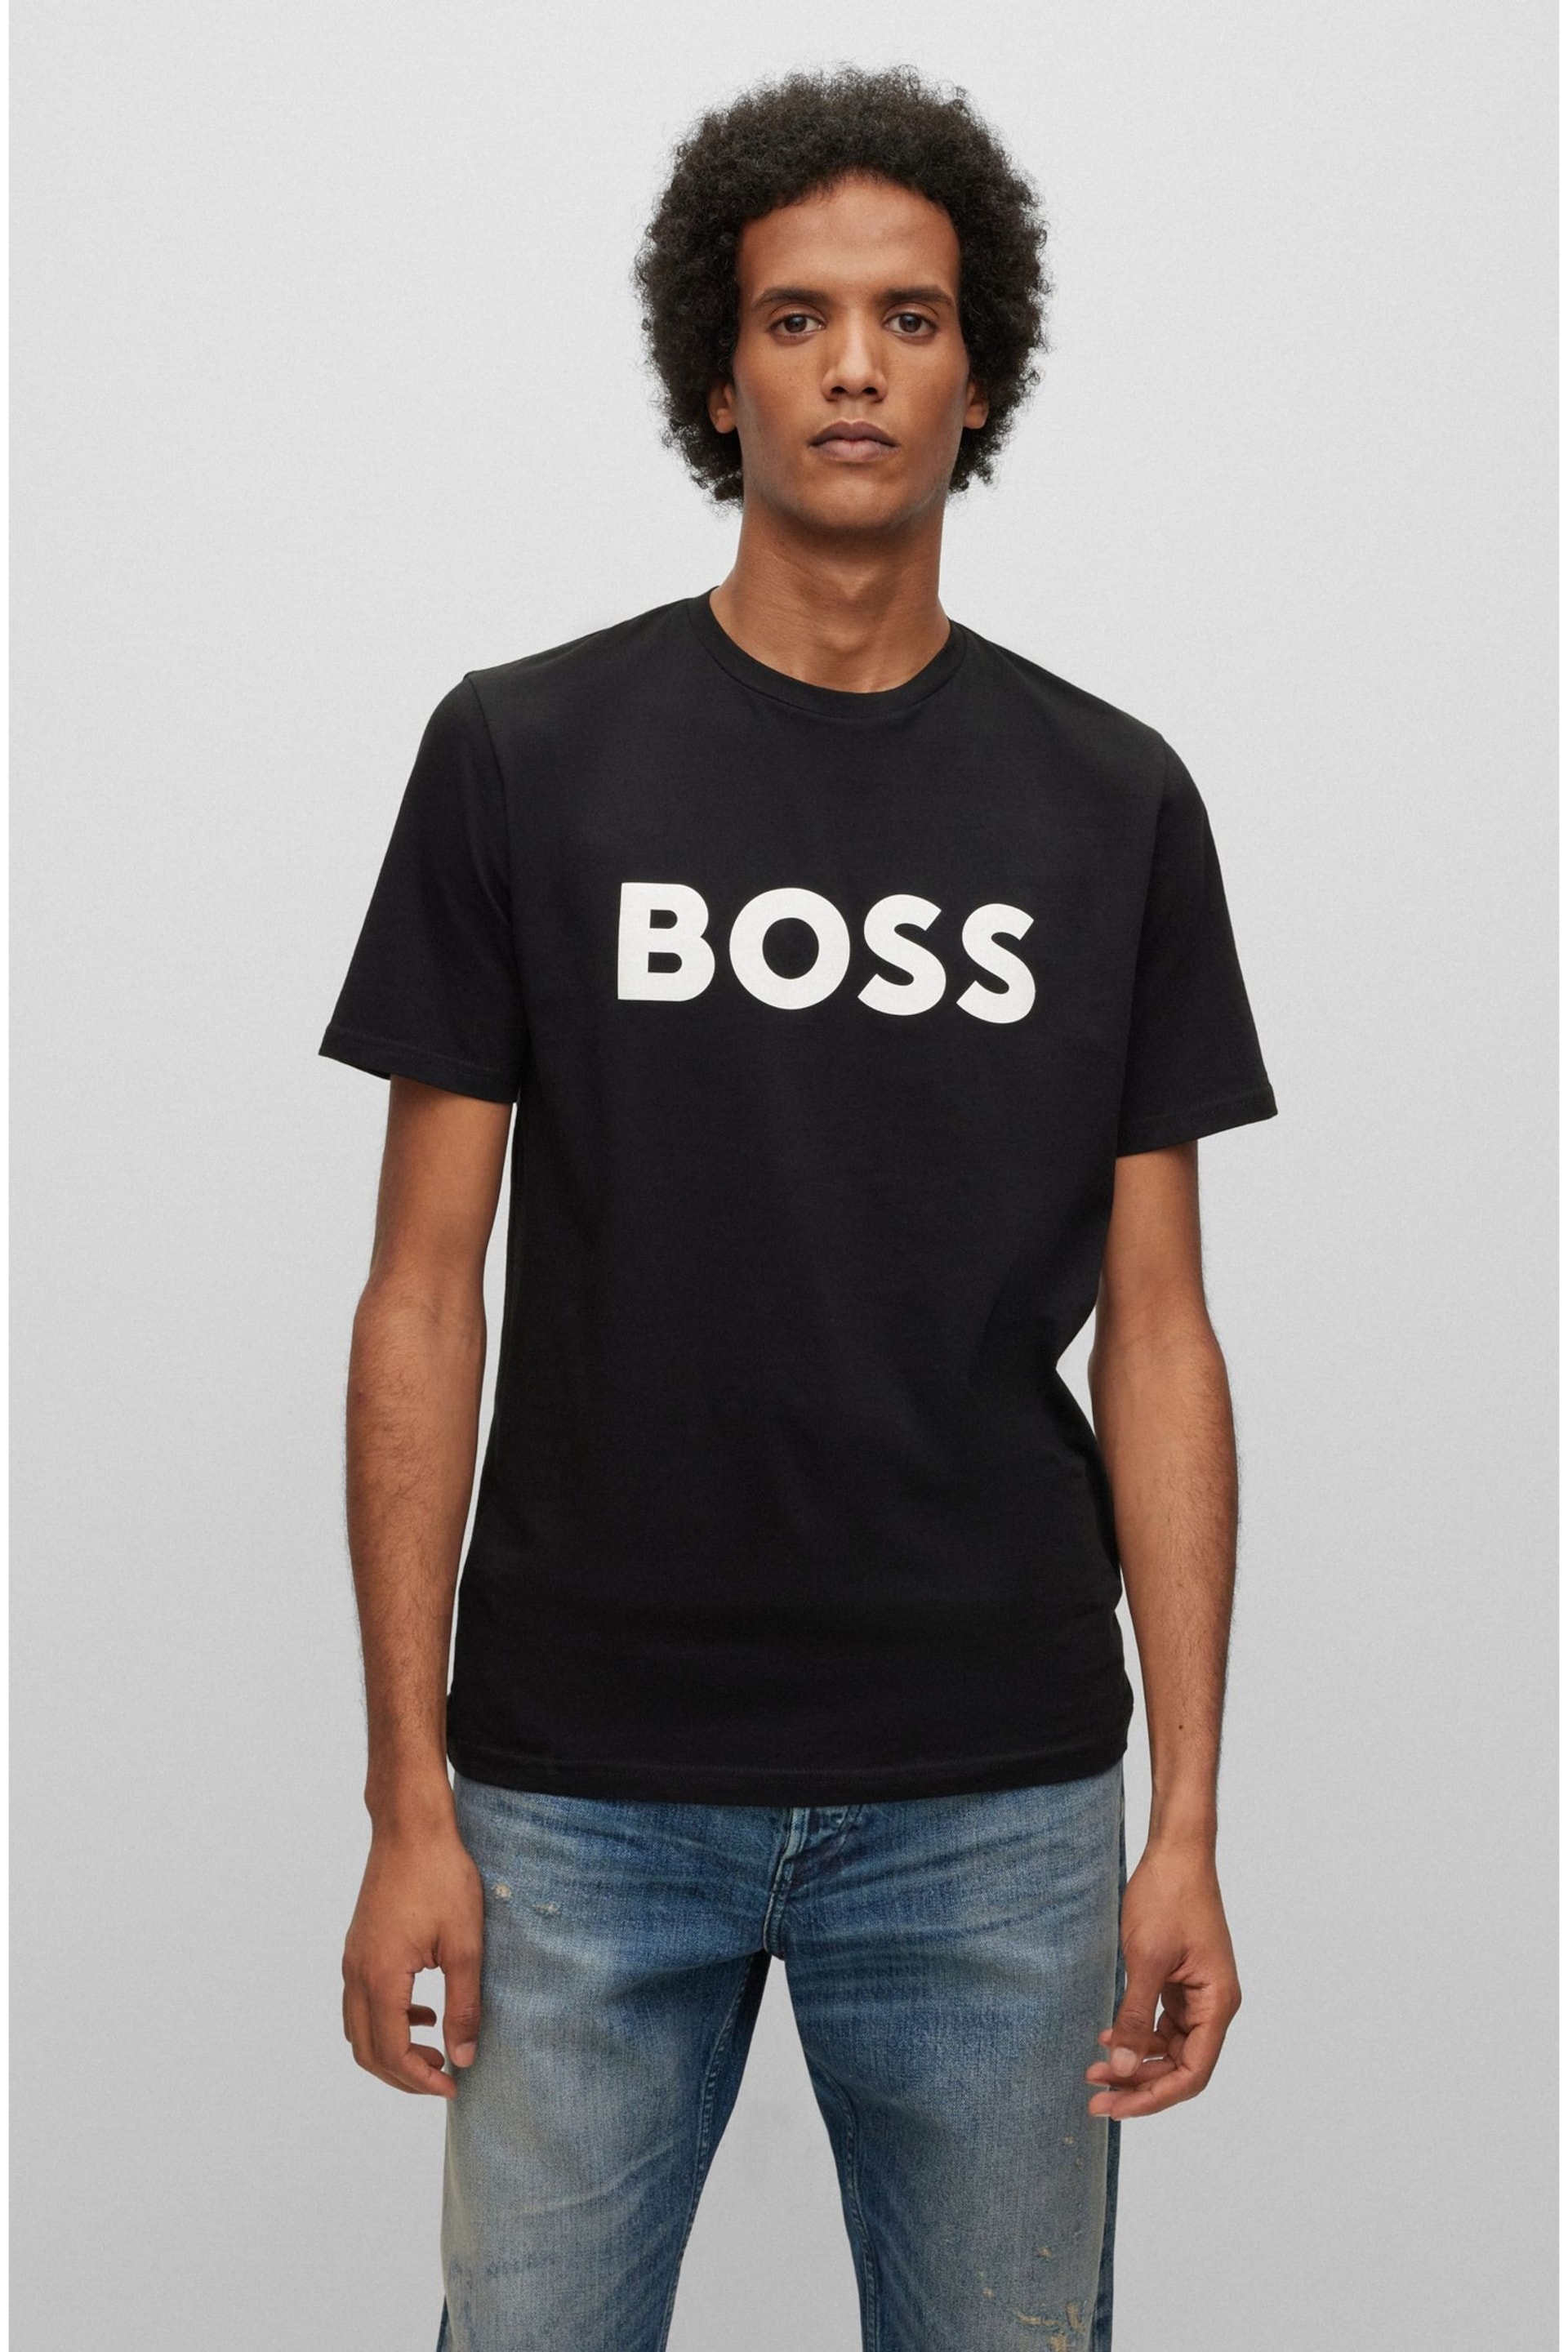 BOSS Black/White Logo Large Chest Logo T-Shirt - Image 1 of 6